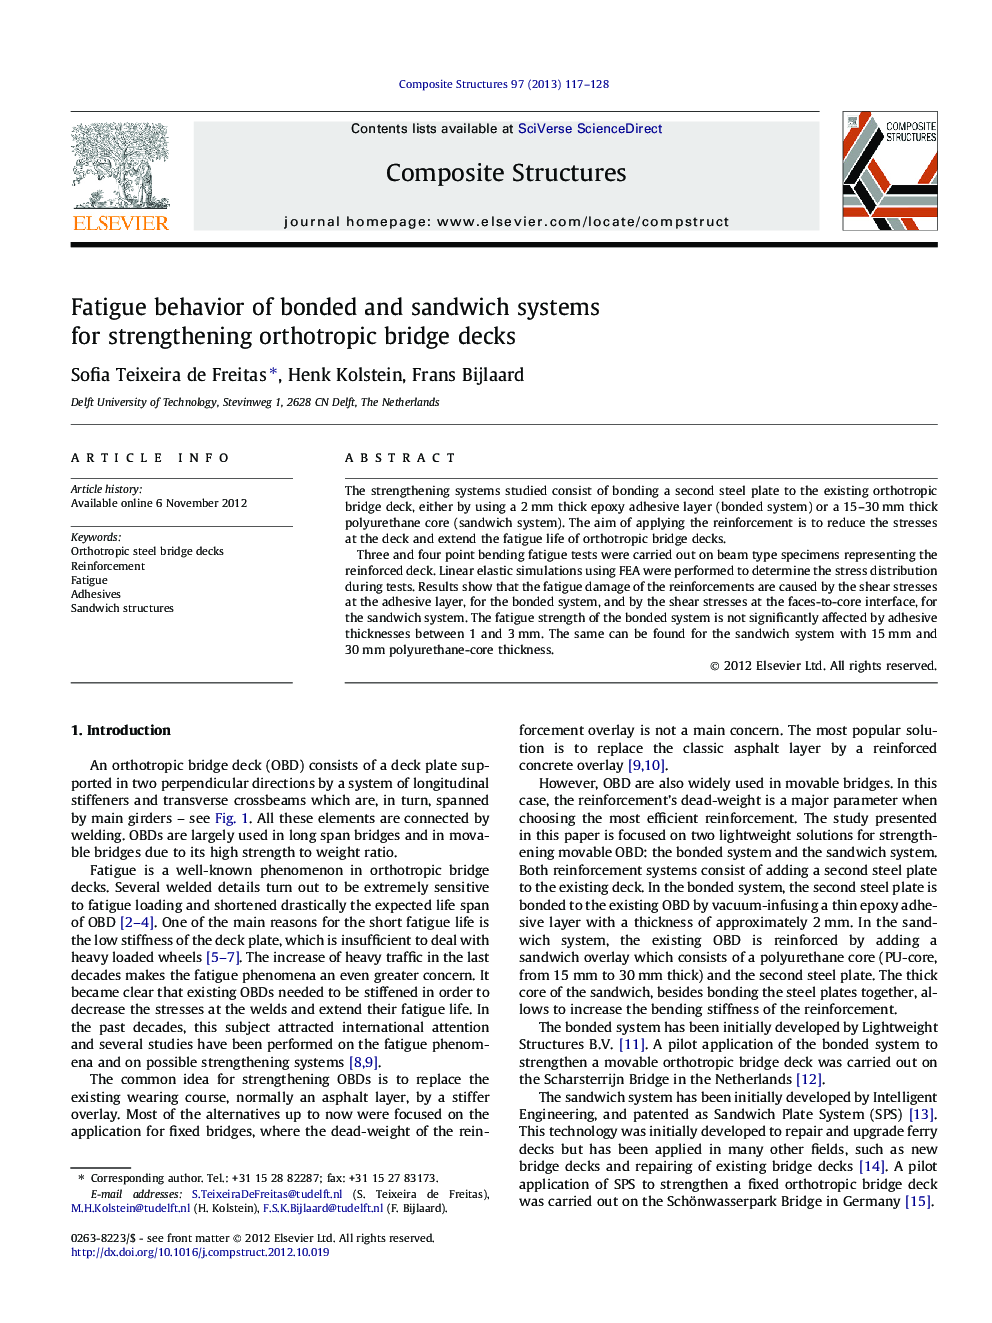 Fatigue behavior of bonded and sandwich systems for strengthening orthotropic bridge decks